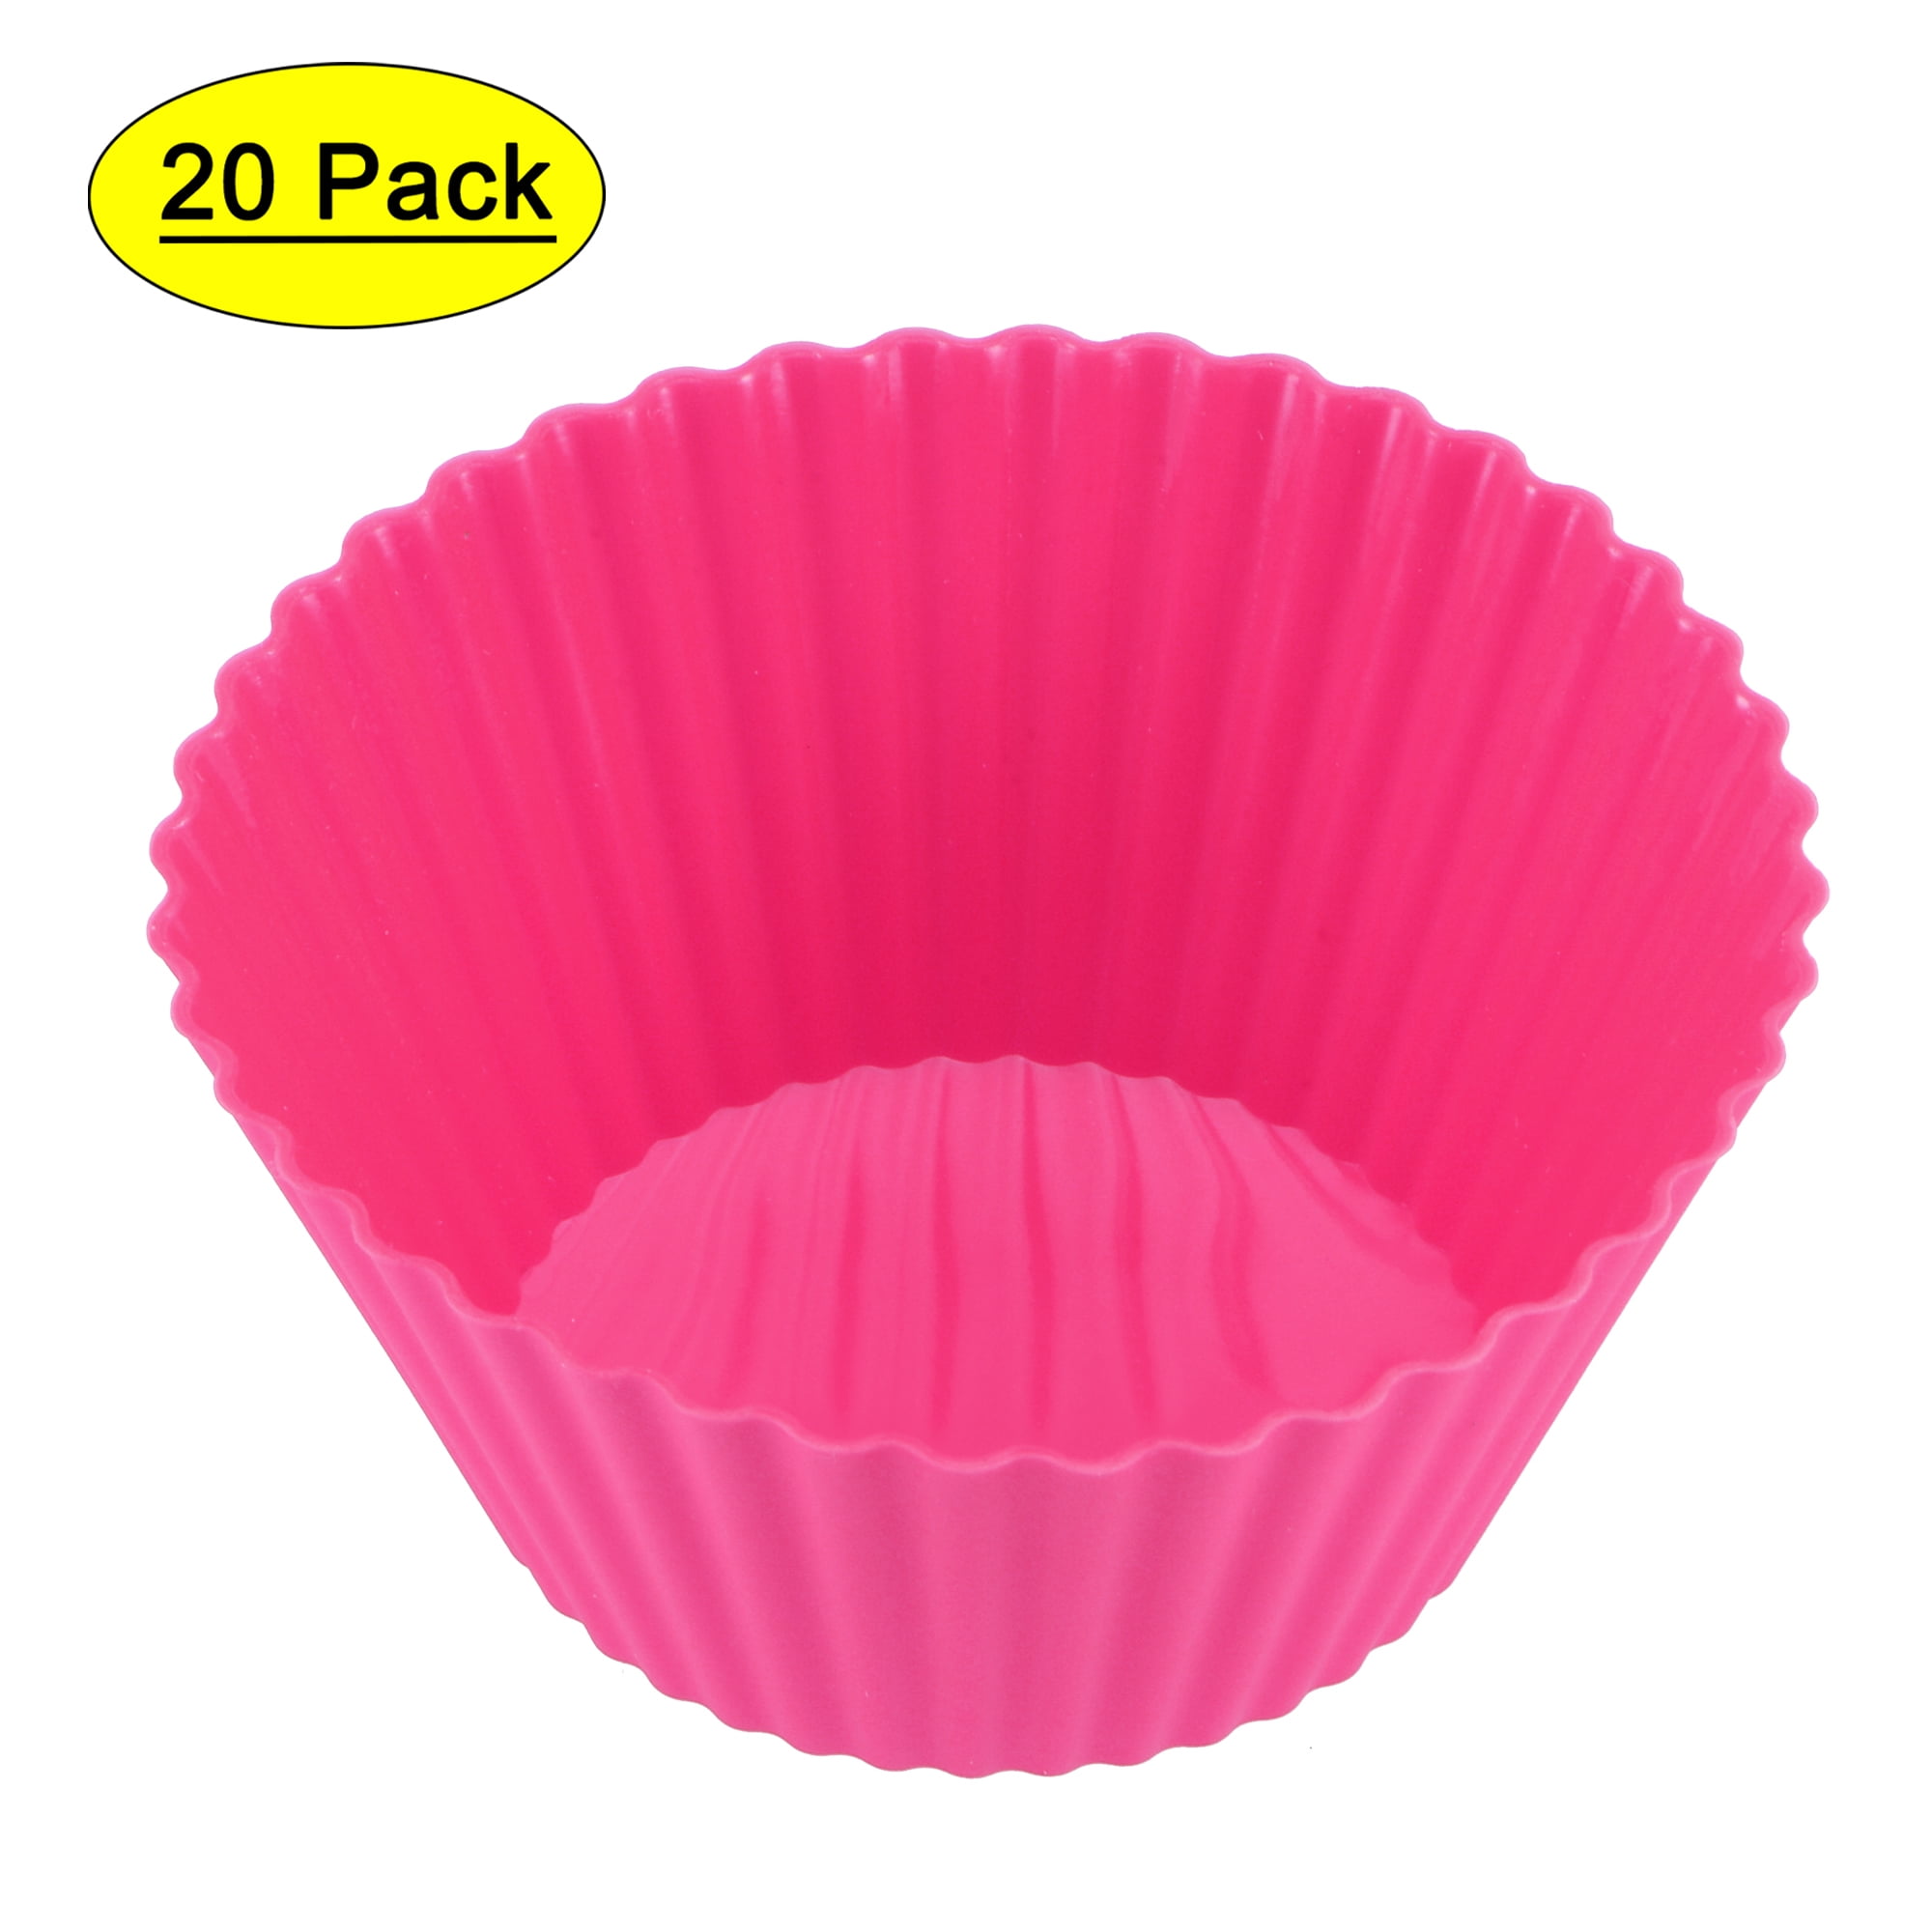 10 Pack of Regular Pink Wax Warmer Liners 100% Reusable & Leakproof